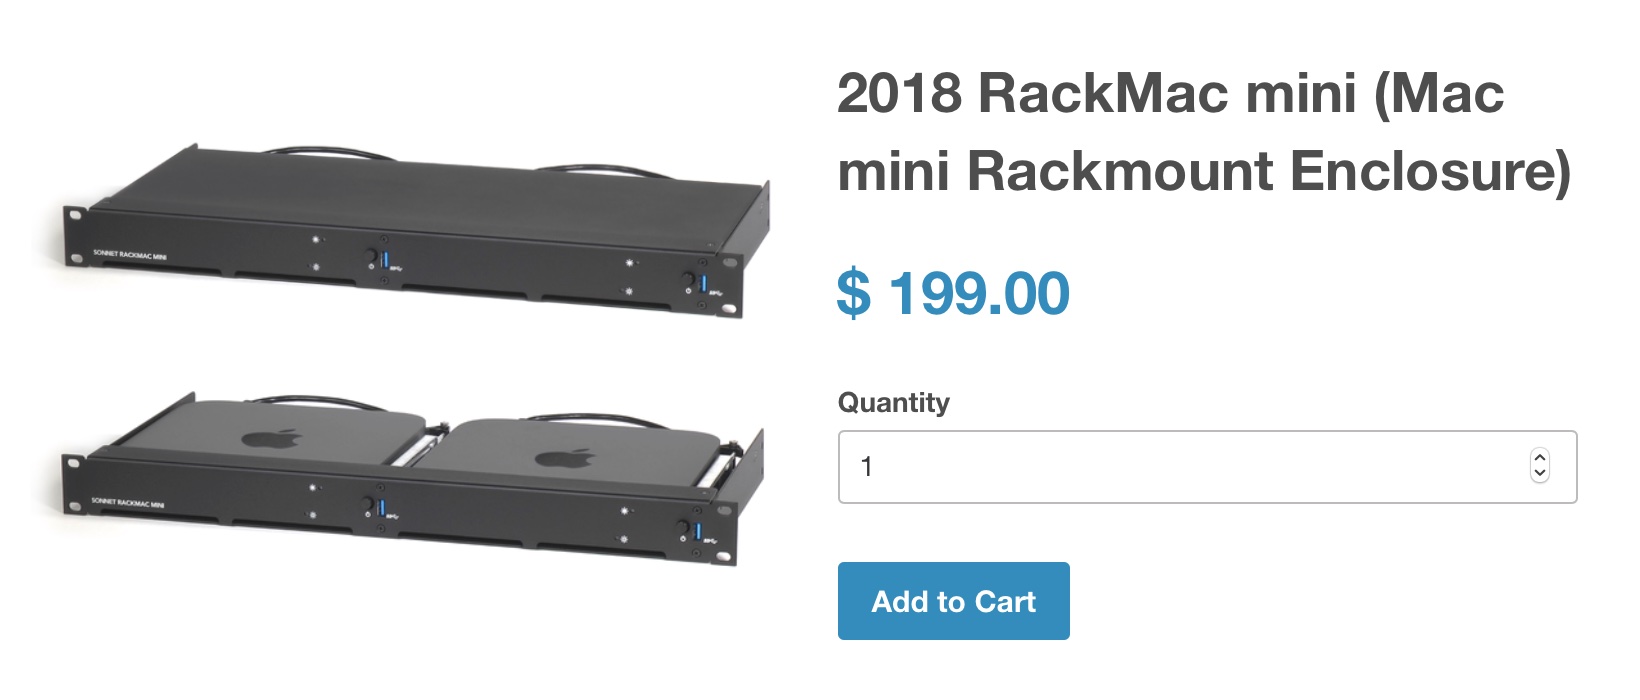 2018 RackMac mini